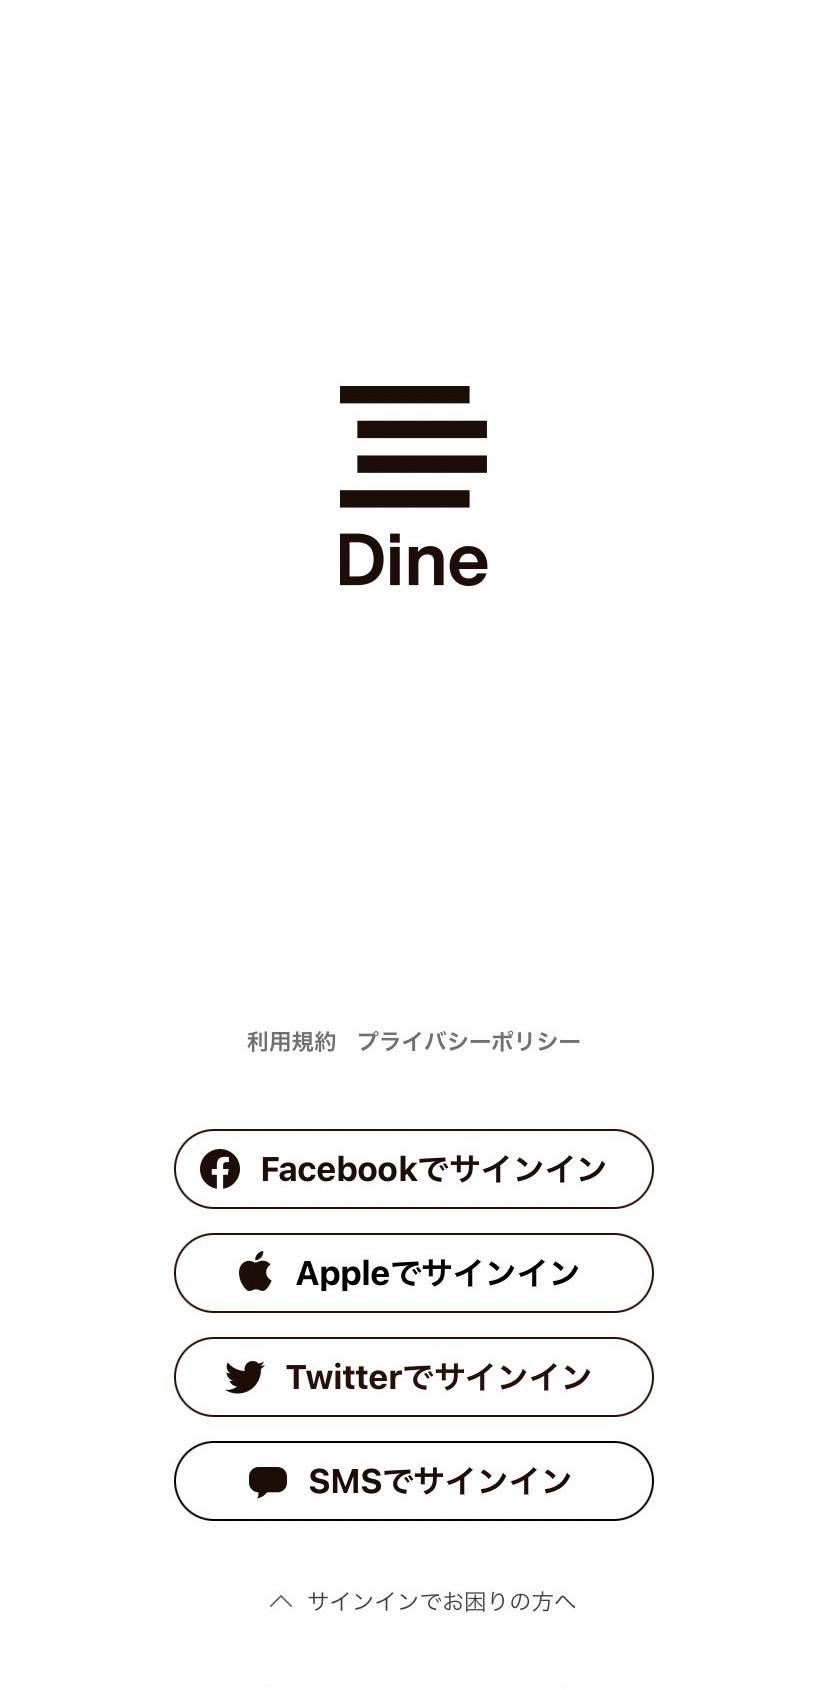 「Dine」